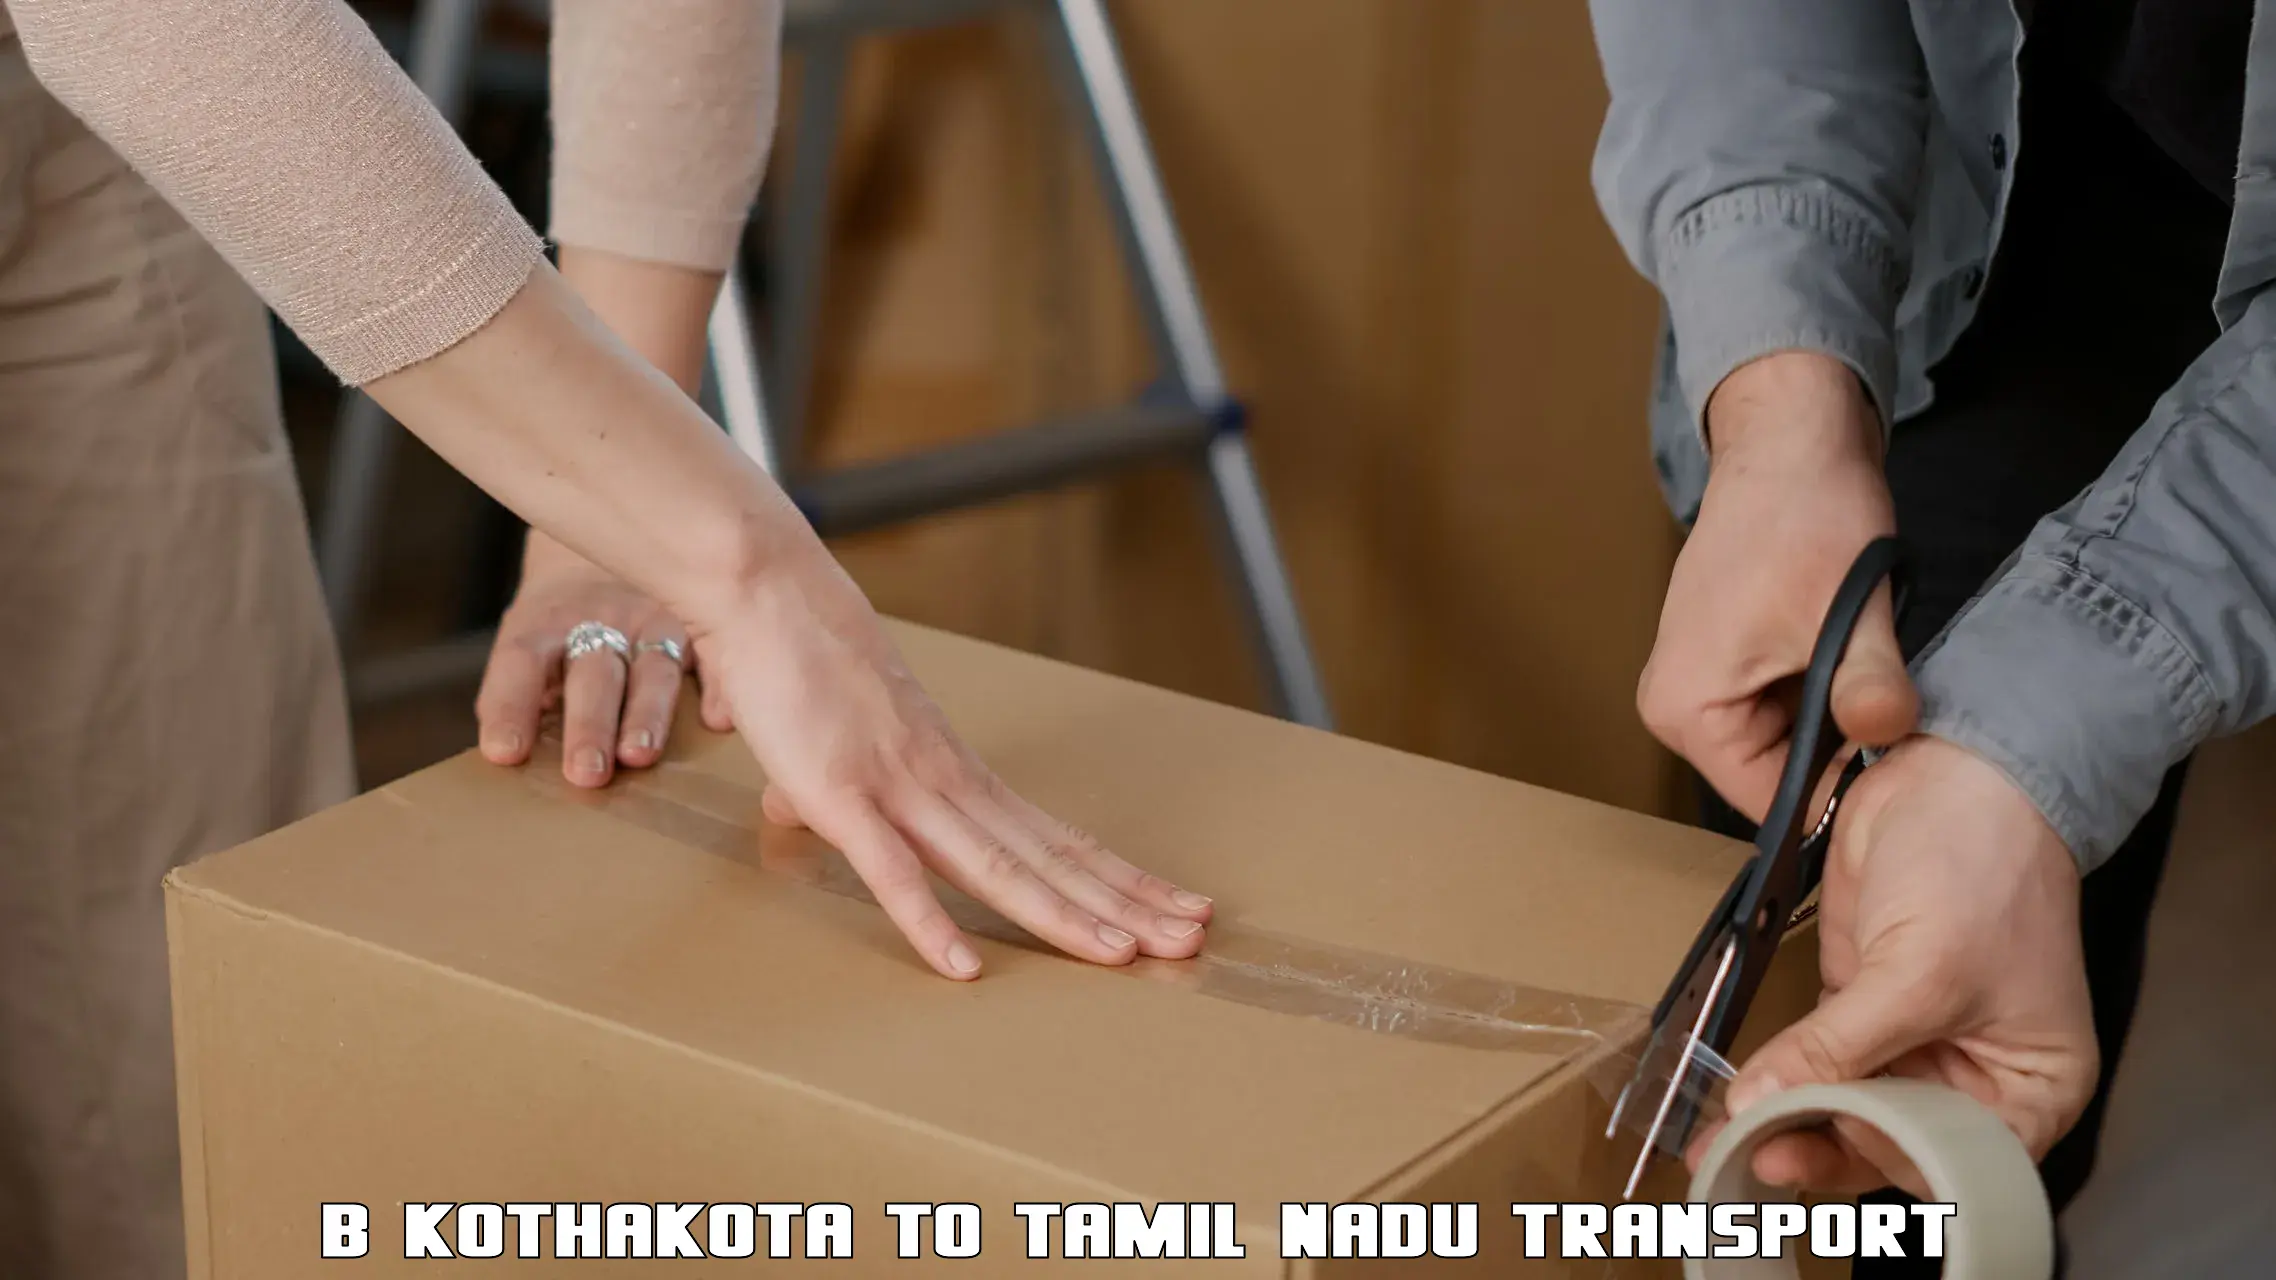 Transportation services in B Kothakota to Tamil Nadu